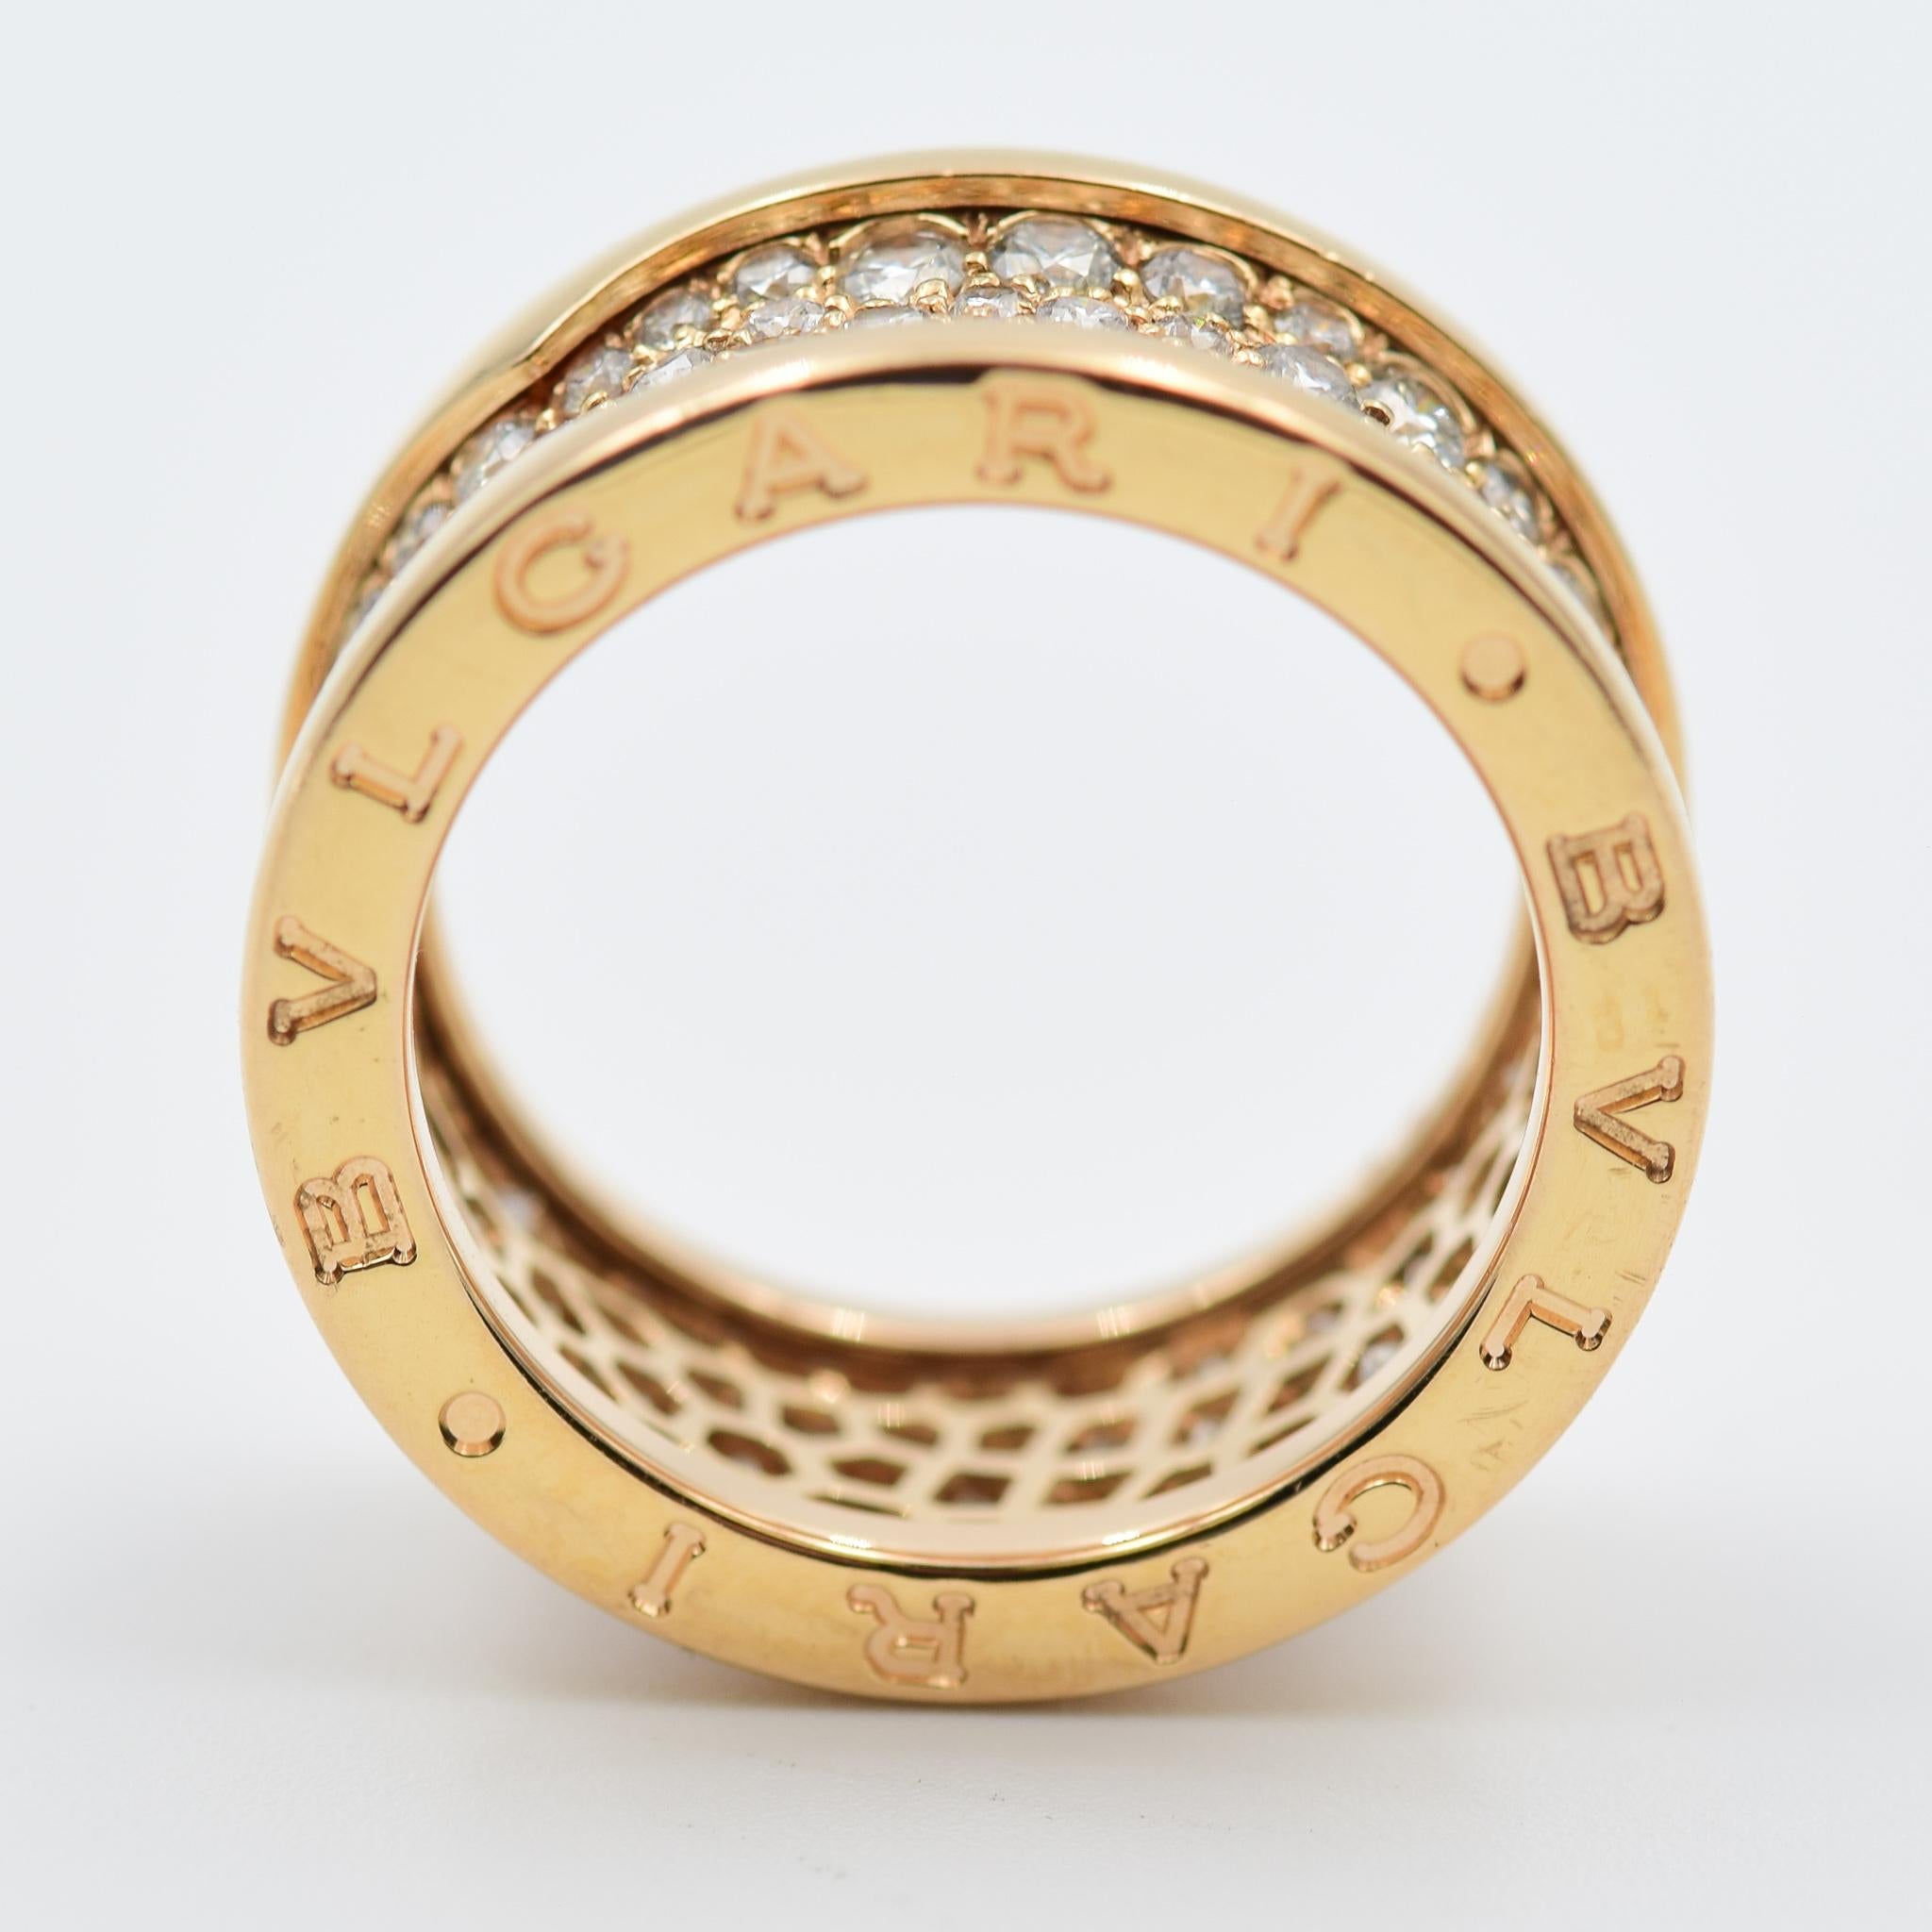 Round Cut Bulgari B.zero1 Ring 345585 in 18 Karat Gold with Pave Diamond on the Spiral